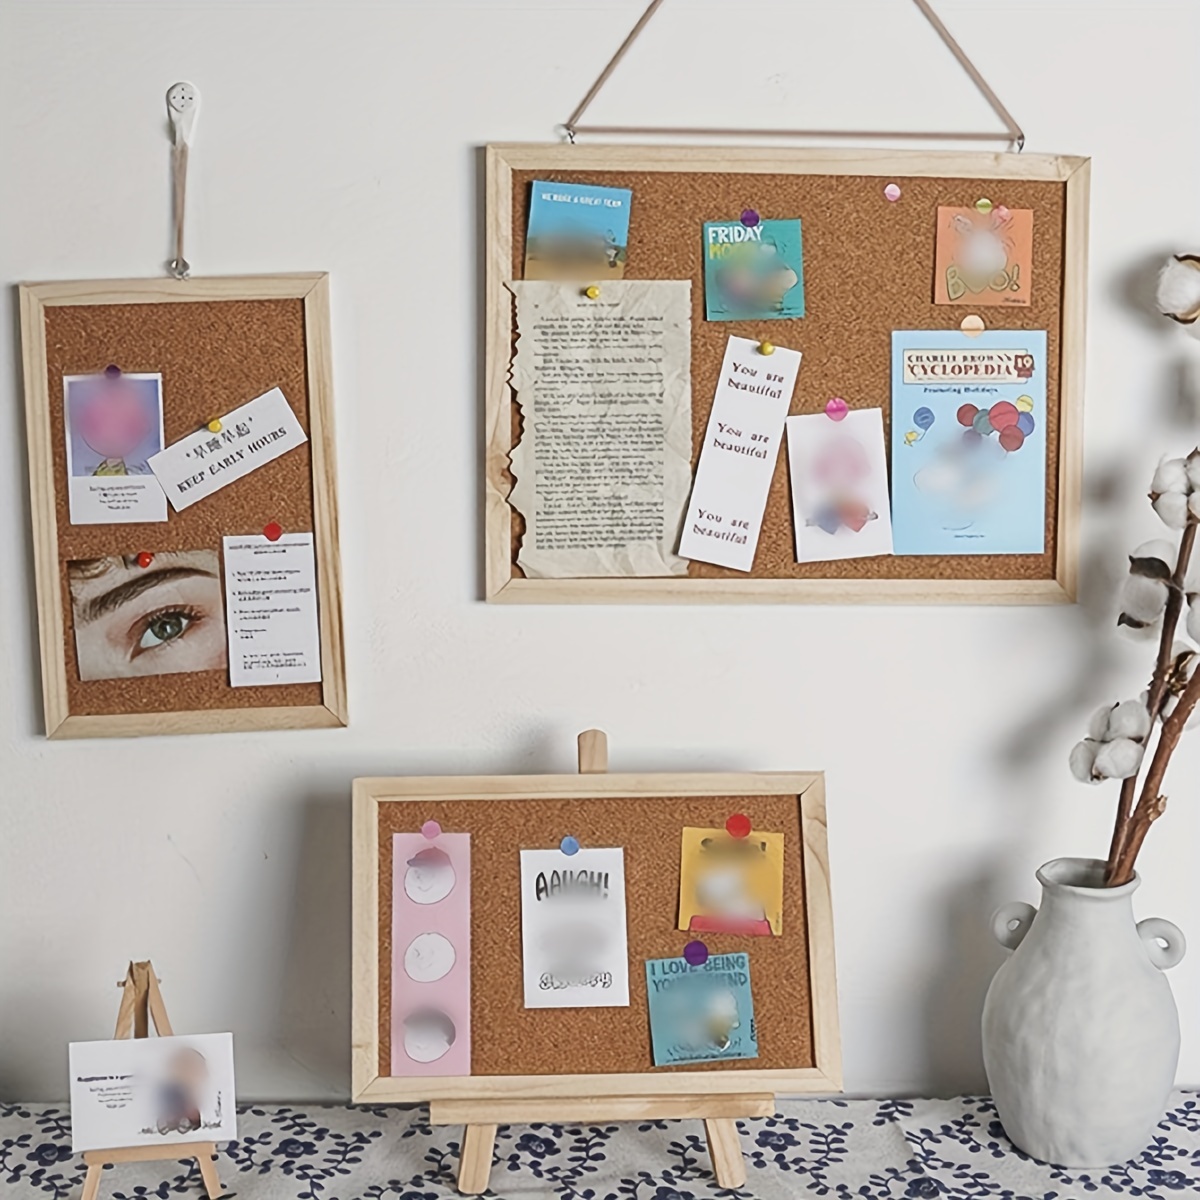 Decorative Bulletin Board Wall Organizer - Cute Framed Self-Adhesive  Printed Cork Board for Home, Office, or School (12x12 In)